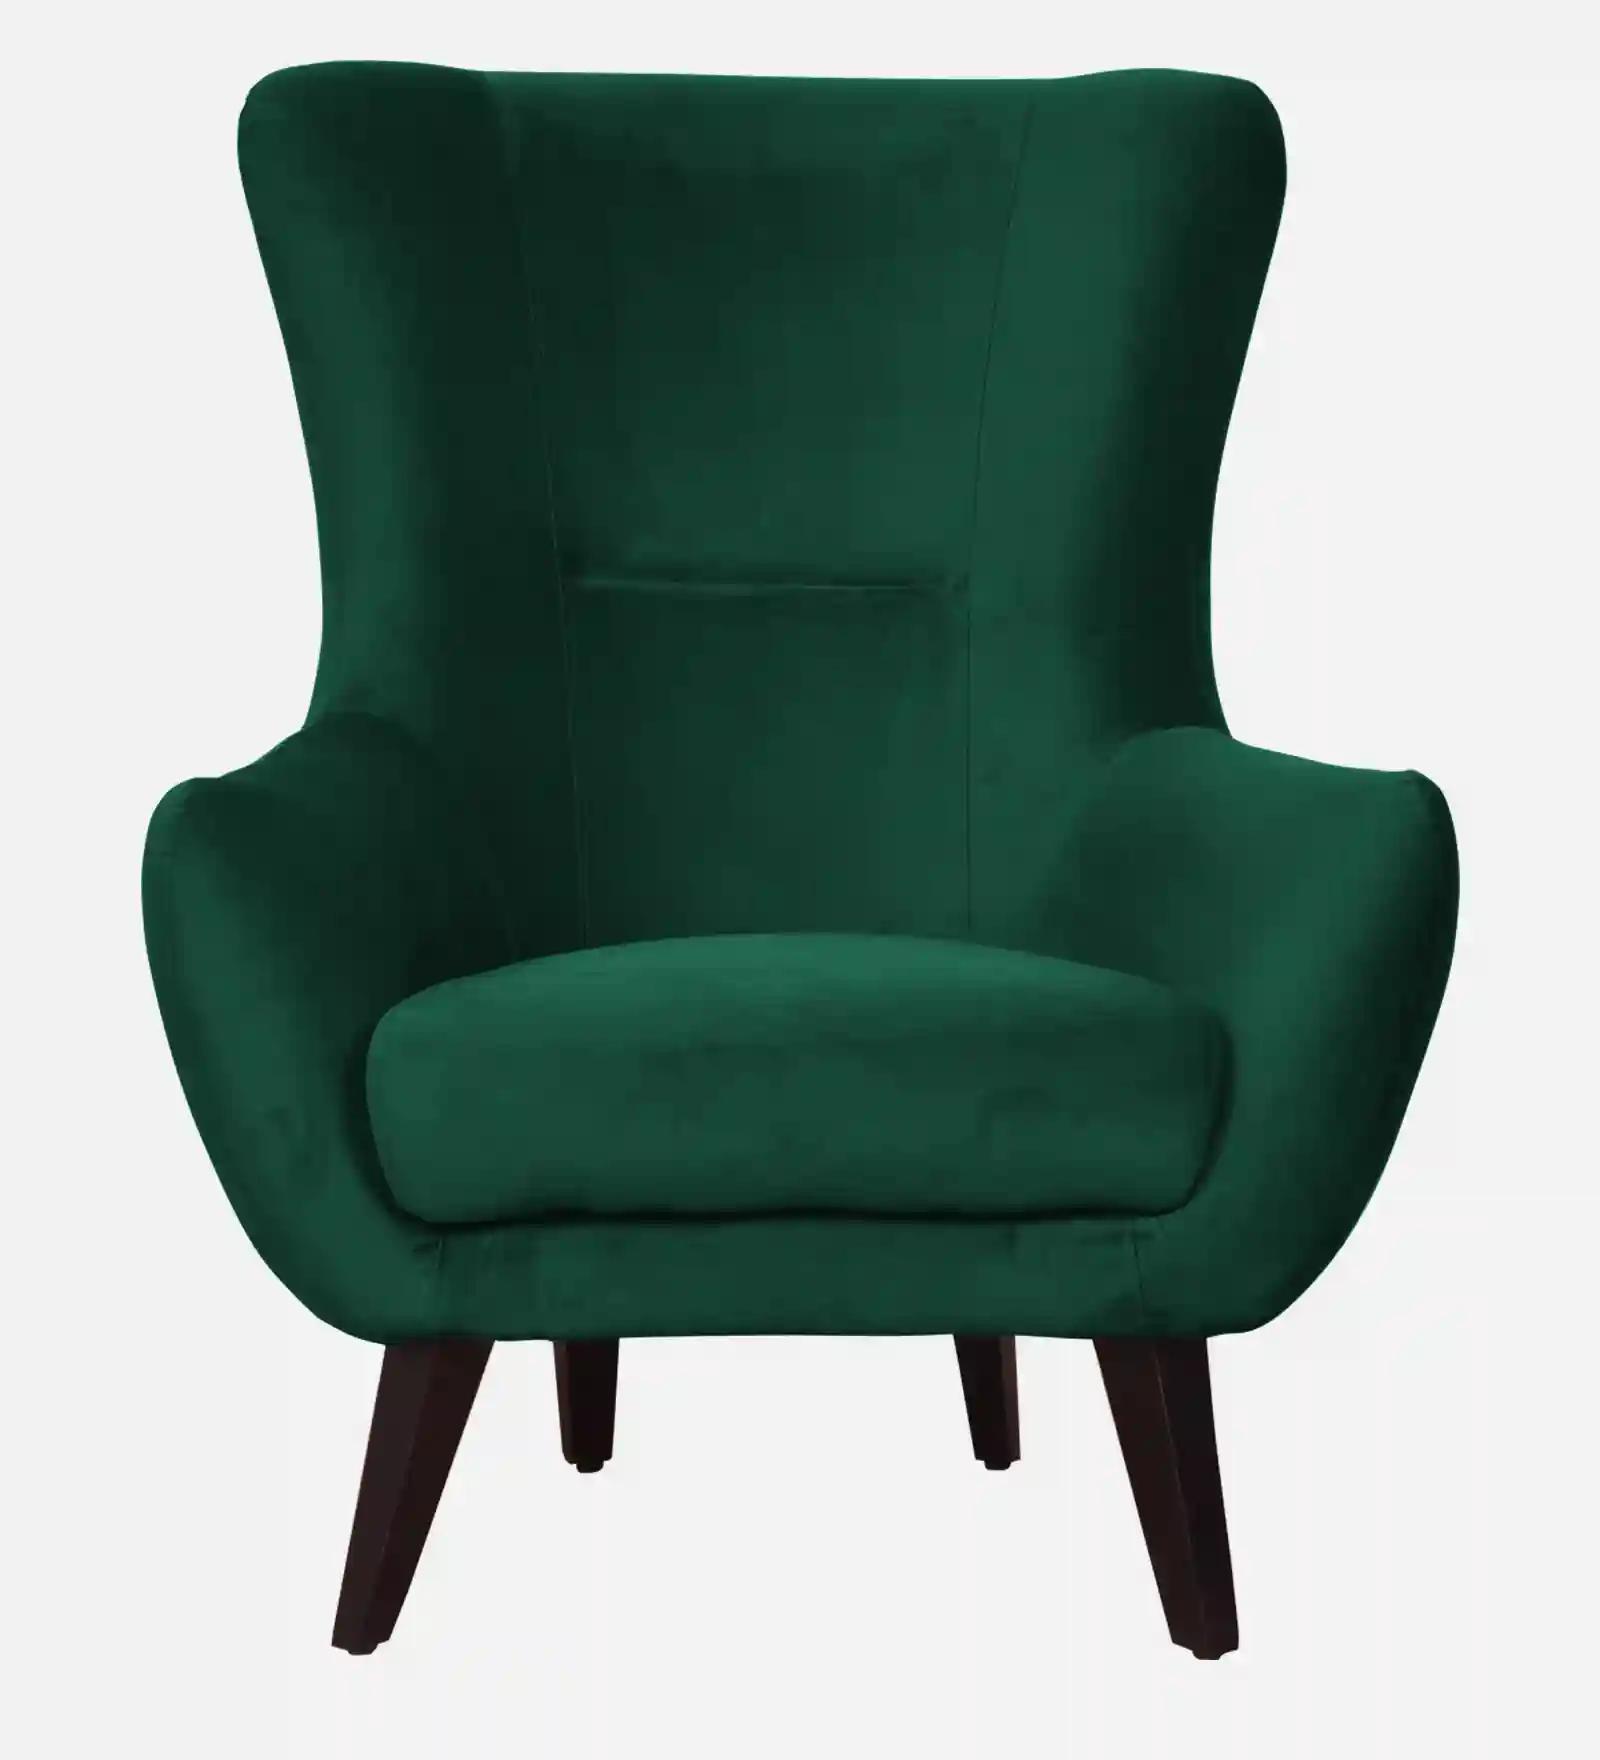 Artimesh Chair -1 Seater